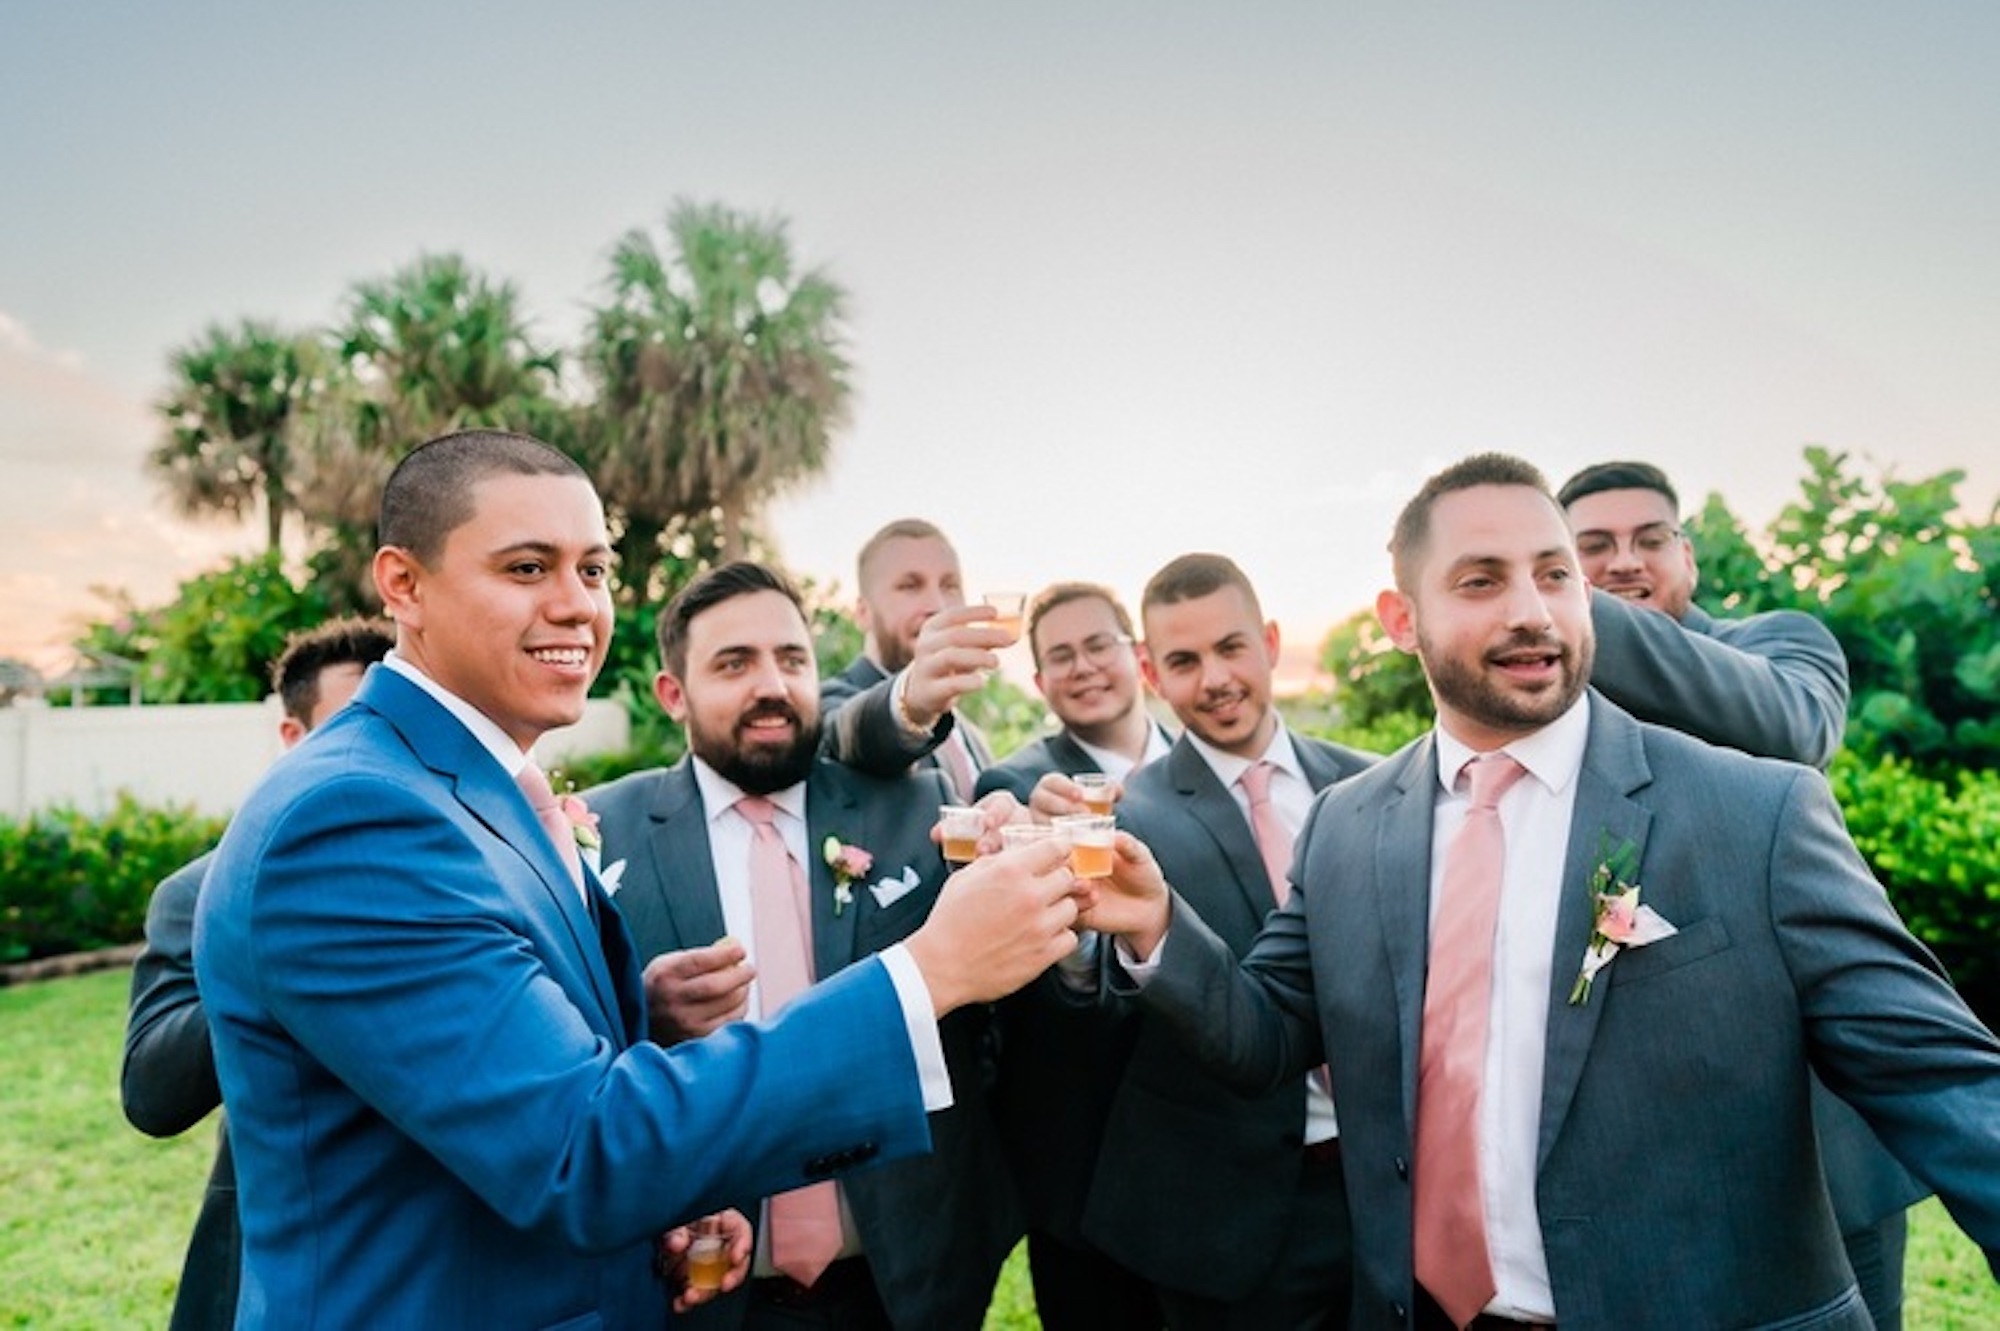 The Wedding Barber - Groomsmen make a toast